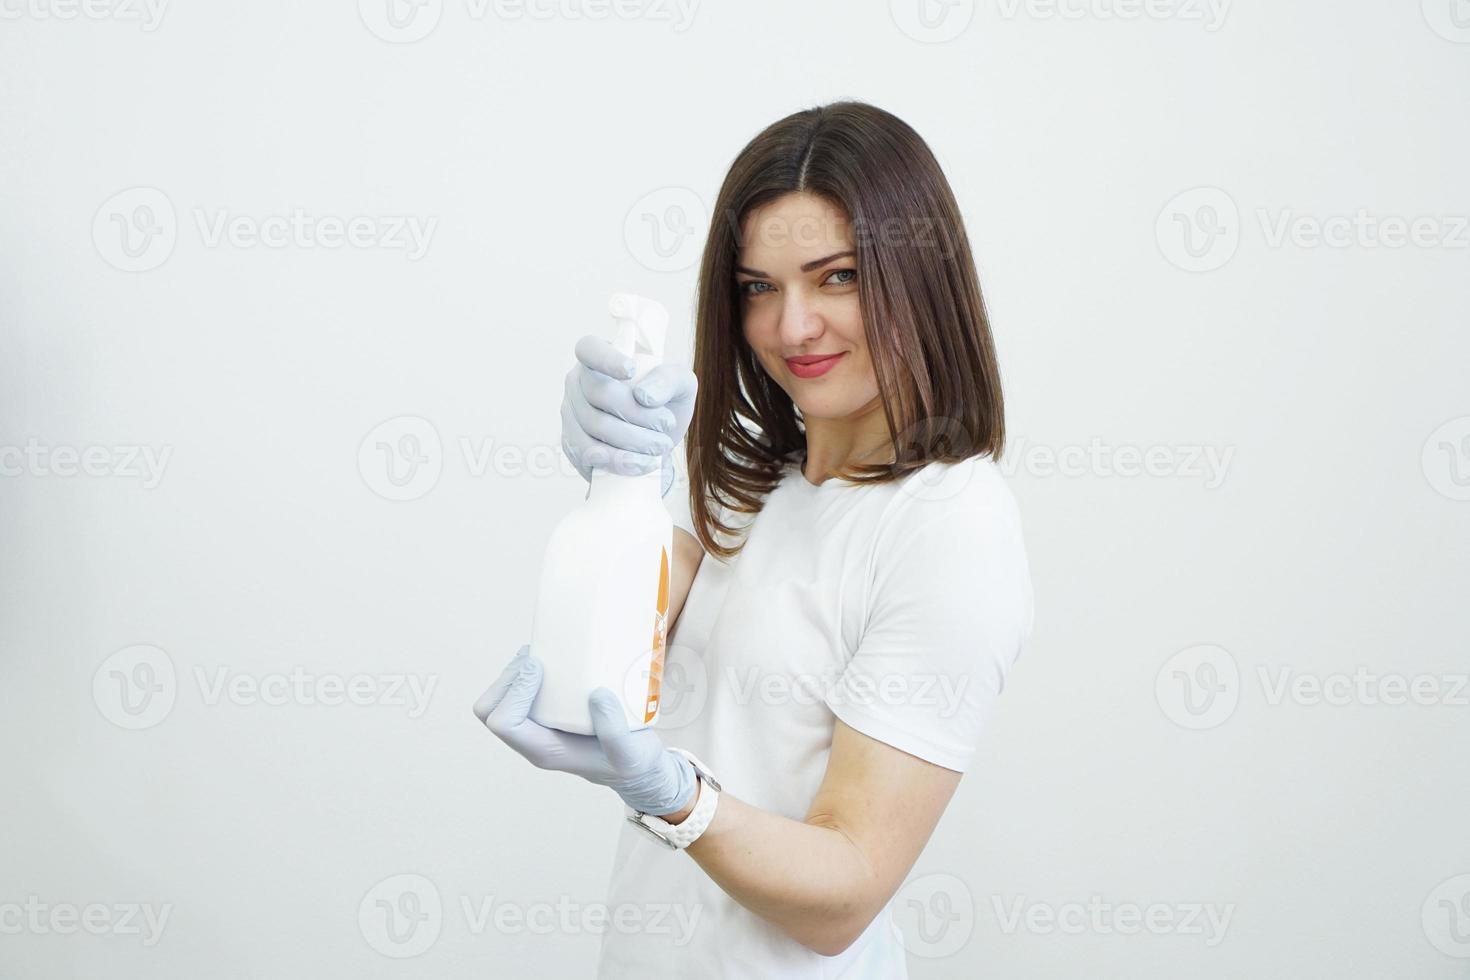 Woman holds spray bottle - antiseptic or detergent like guns photo